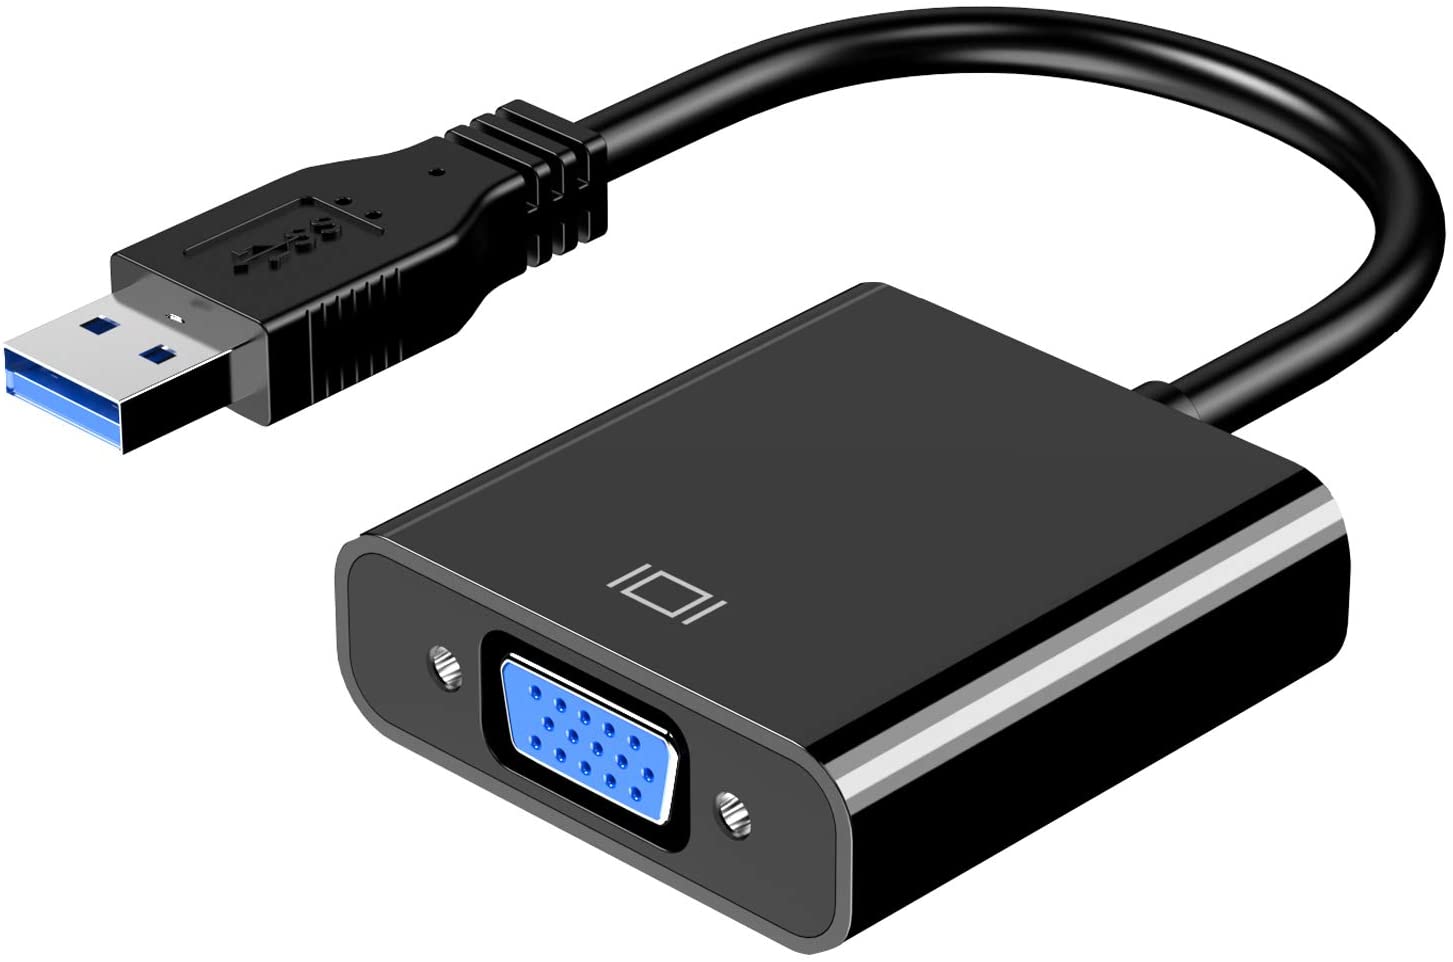 USB to VGA Adapter,USB 3.0 to VGA Adapter Multi-Display Video Converter- PC Laptop Windows 7/8/8.1/10,Desktop, Laptop, PC, Monitor, Projector, HDTV